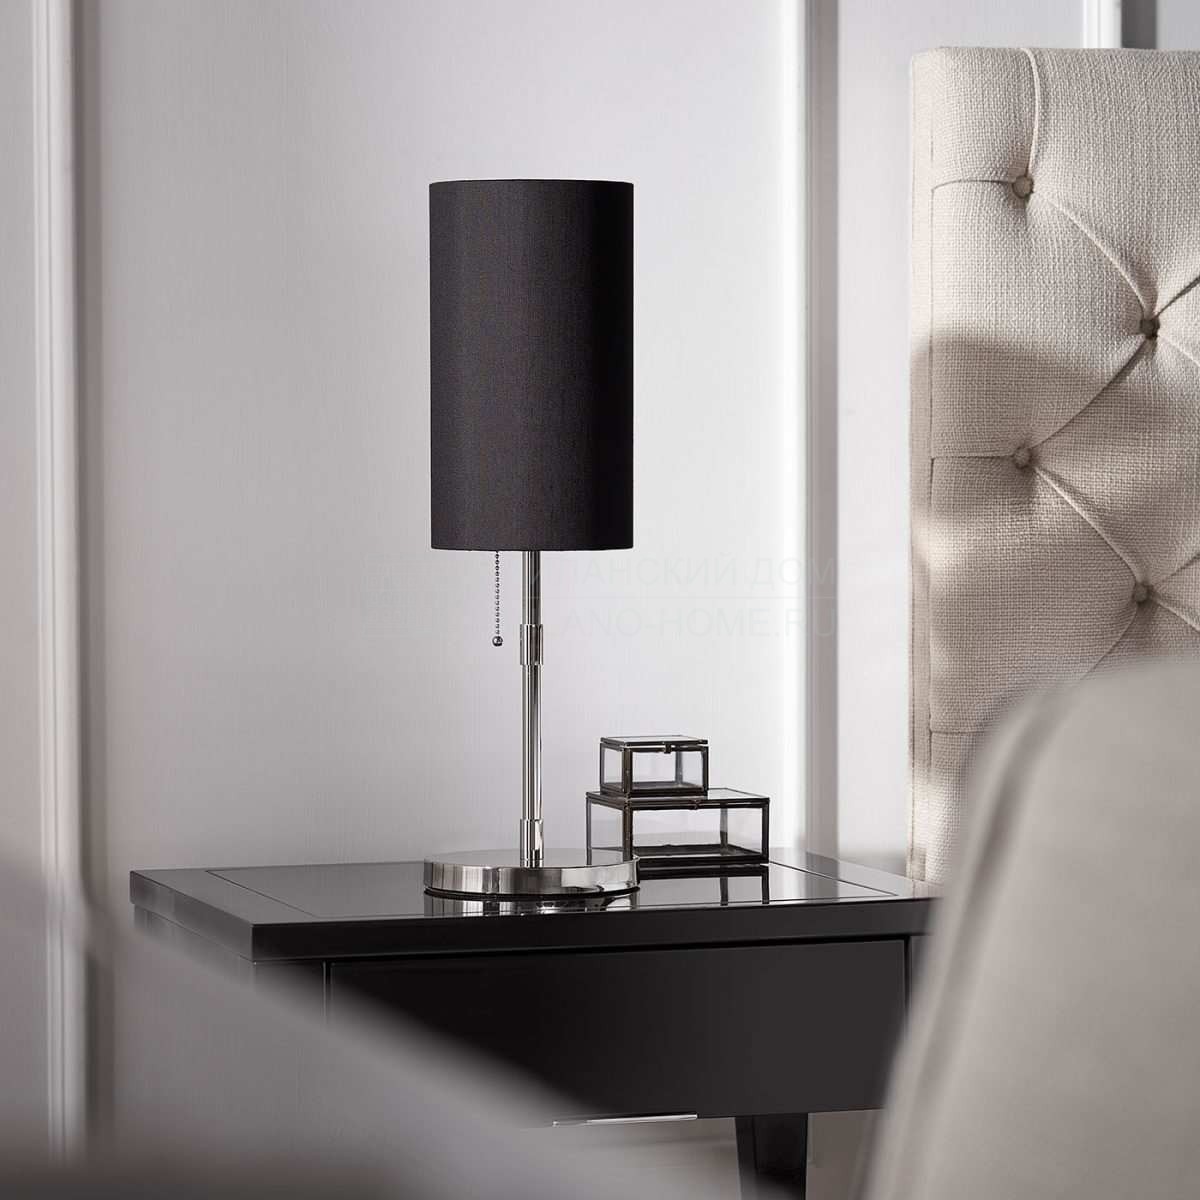 Настольная лампа Yves table lamp / art. 5245 из Италии фабрики TOSCONOVA